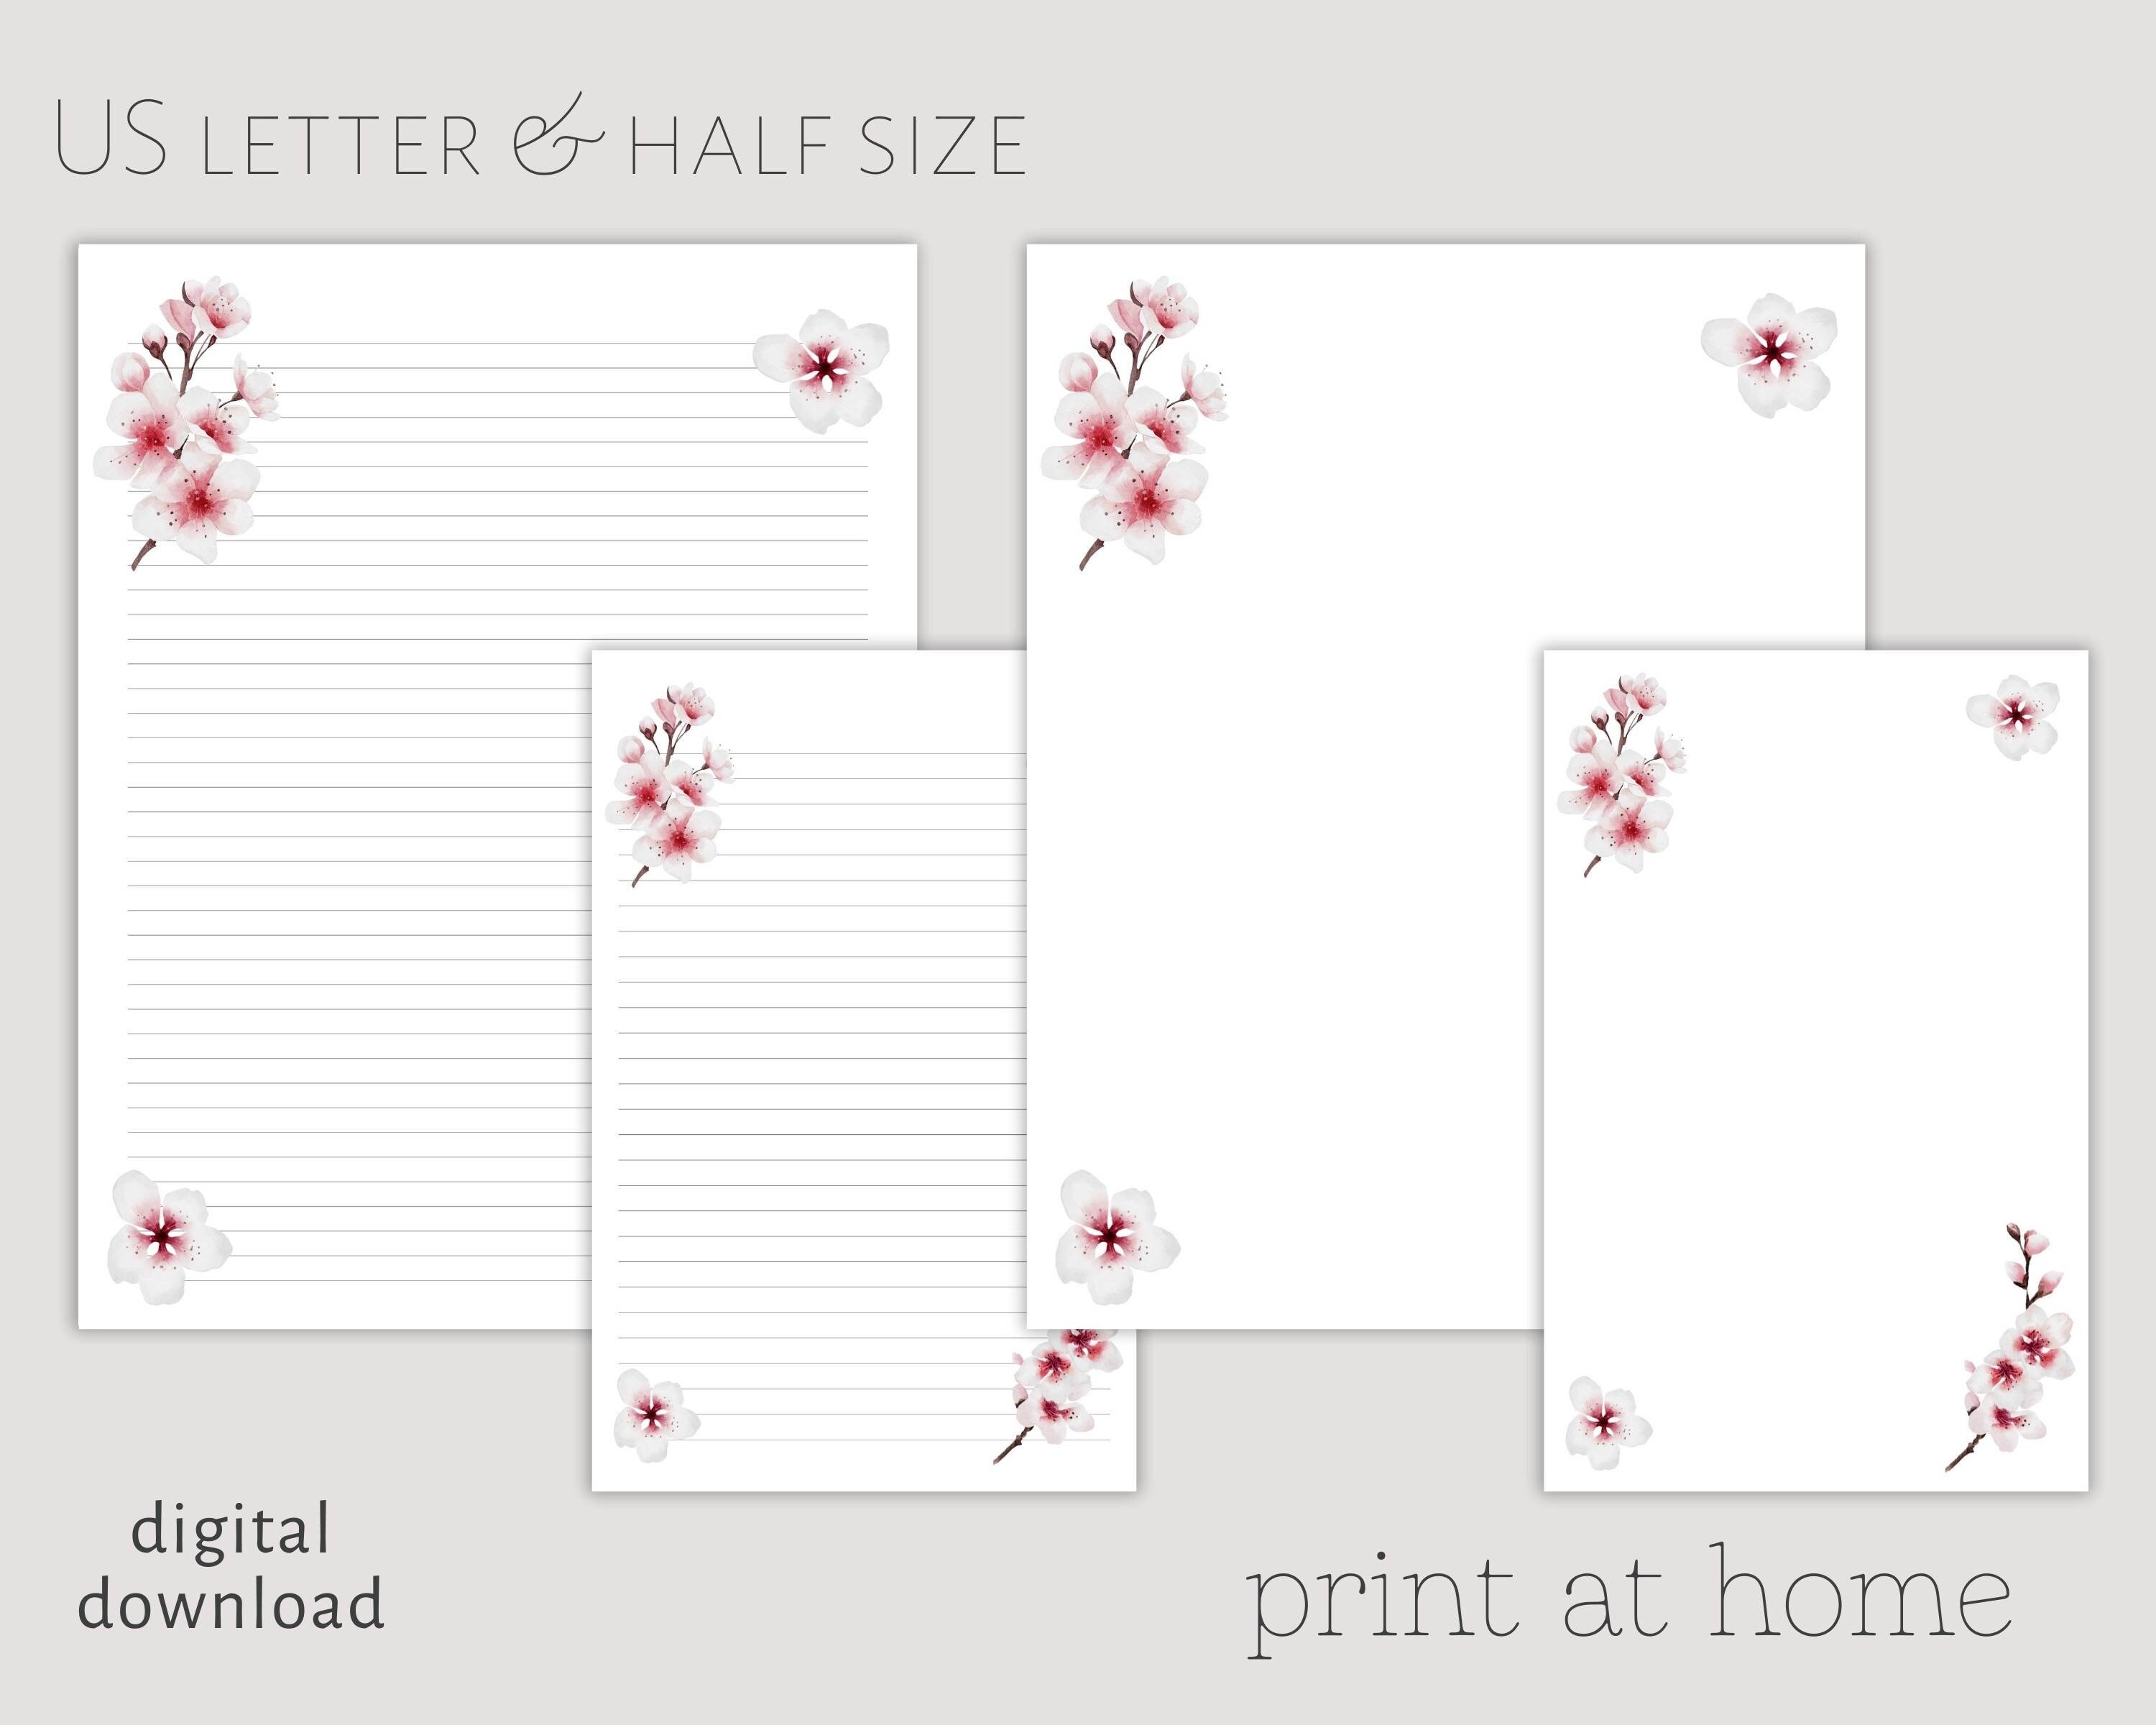 Printable Letter Paper, Letter Writing Paper, Decorative Paper, Pretty  Letter Paper, Printable Stationary, Fancy Letter Paper, Floral Paper 